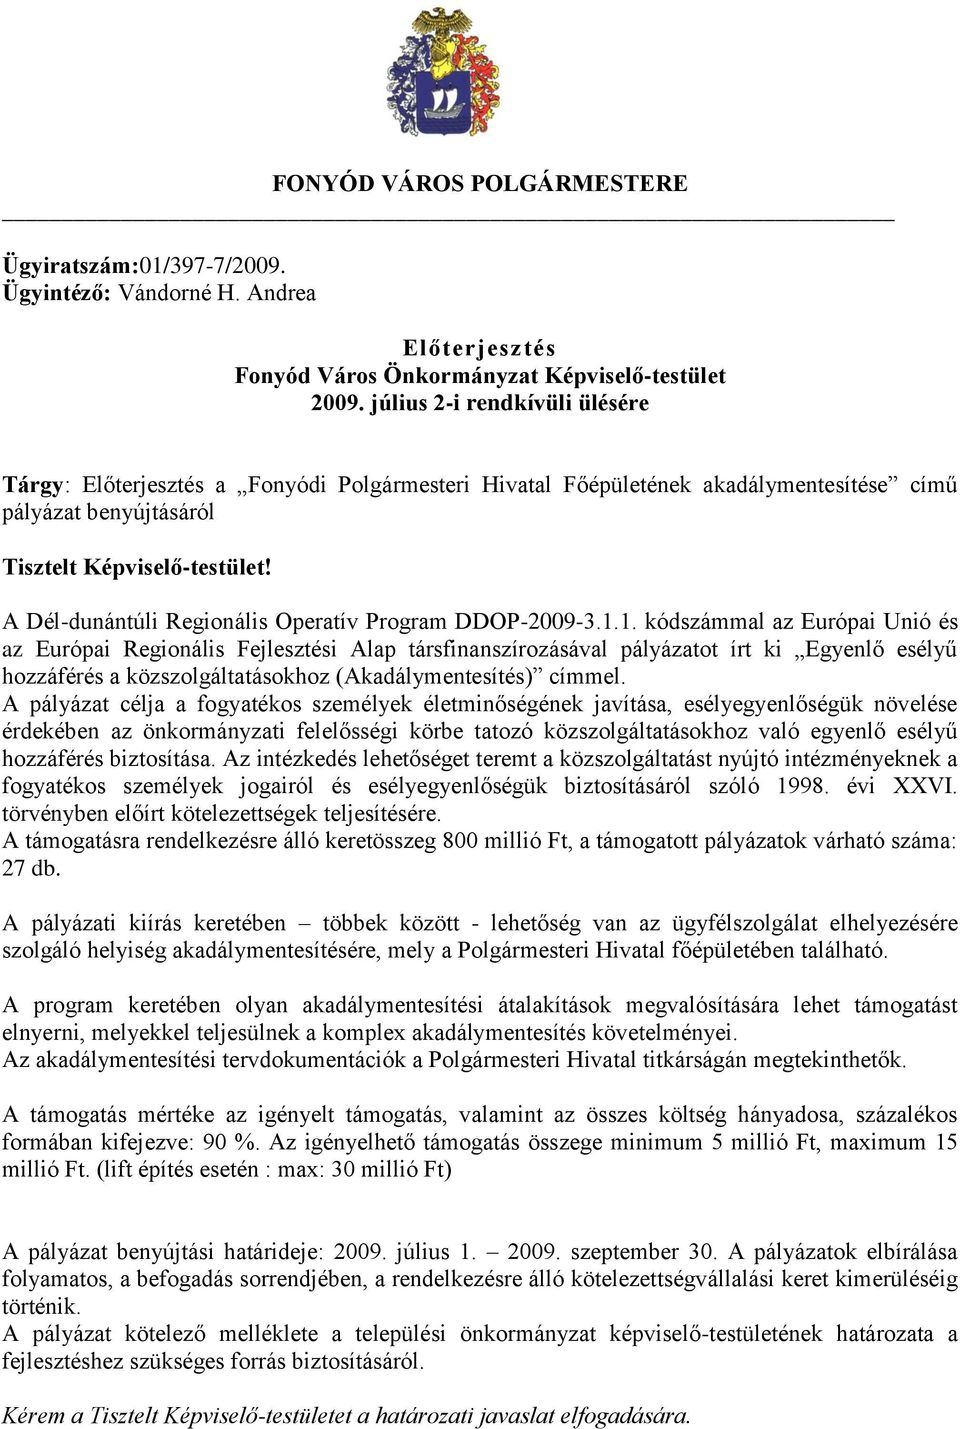 A Dél-dunántúli Regionális Operatív Program DDOP-2009-3.1.